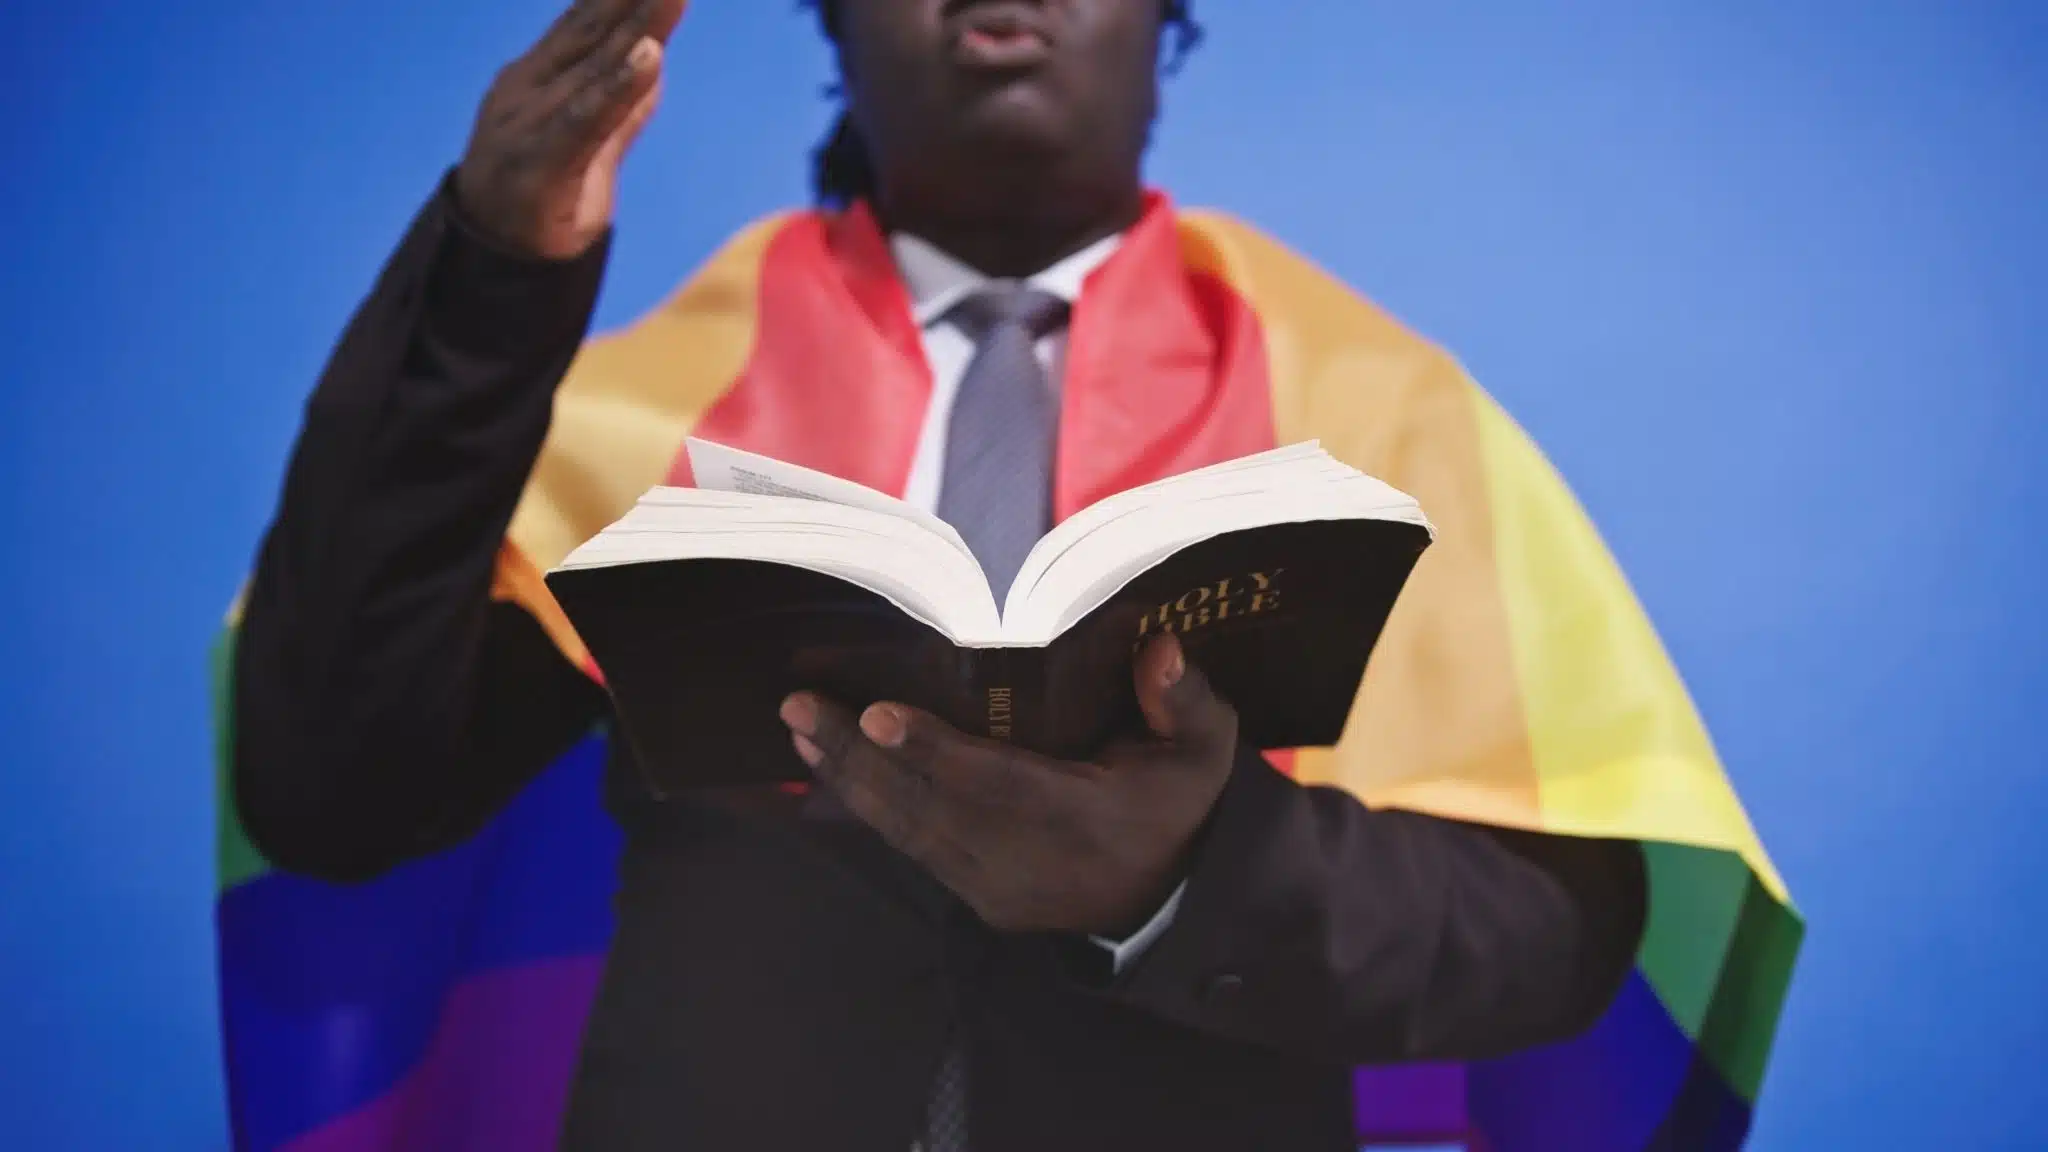 pro-LGBT man reading the Bible